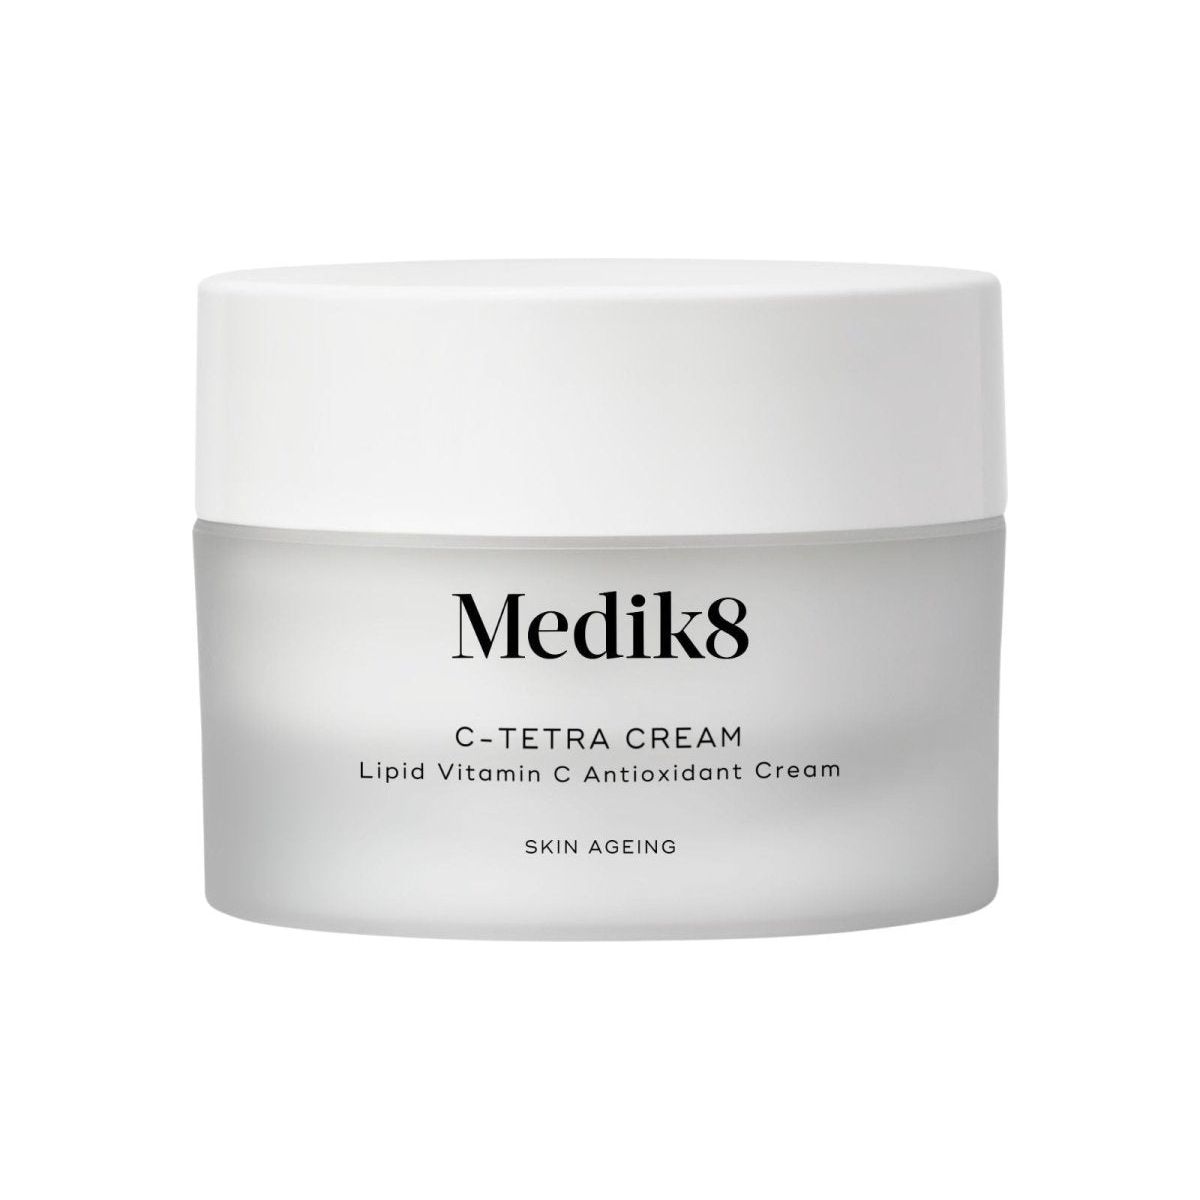 Medik8 | C-Tetra Cream | 50ml - DG International Ventures Limited